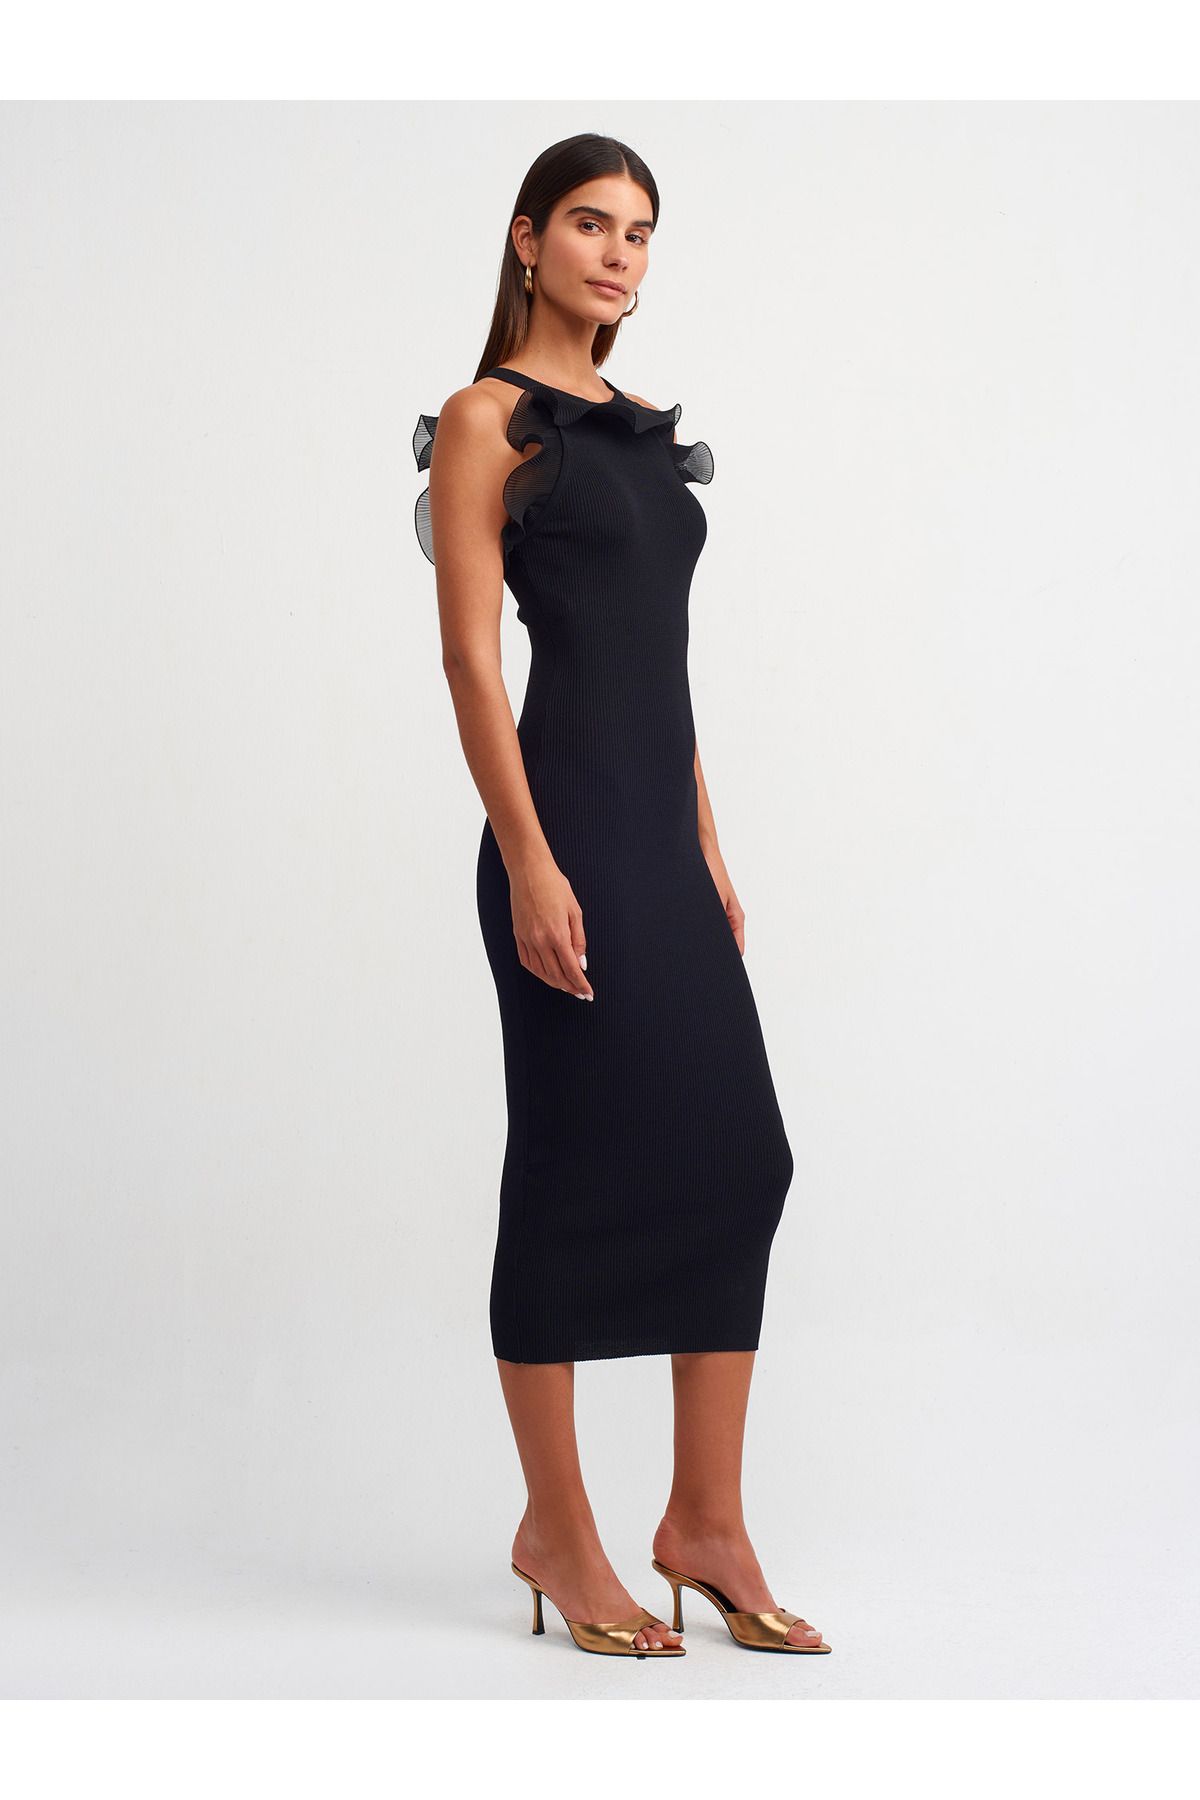 Dilvin 90201 Fitilli Fırfır Kumaş Detaylı Triko Elbise-Siyah